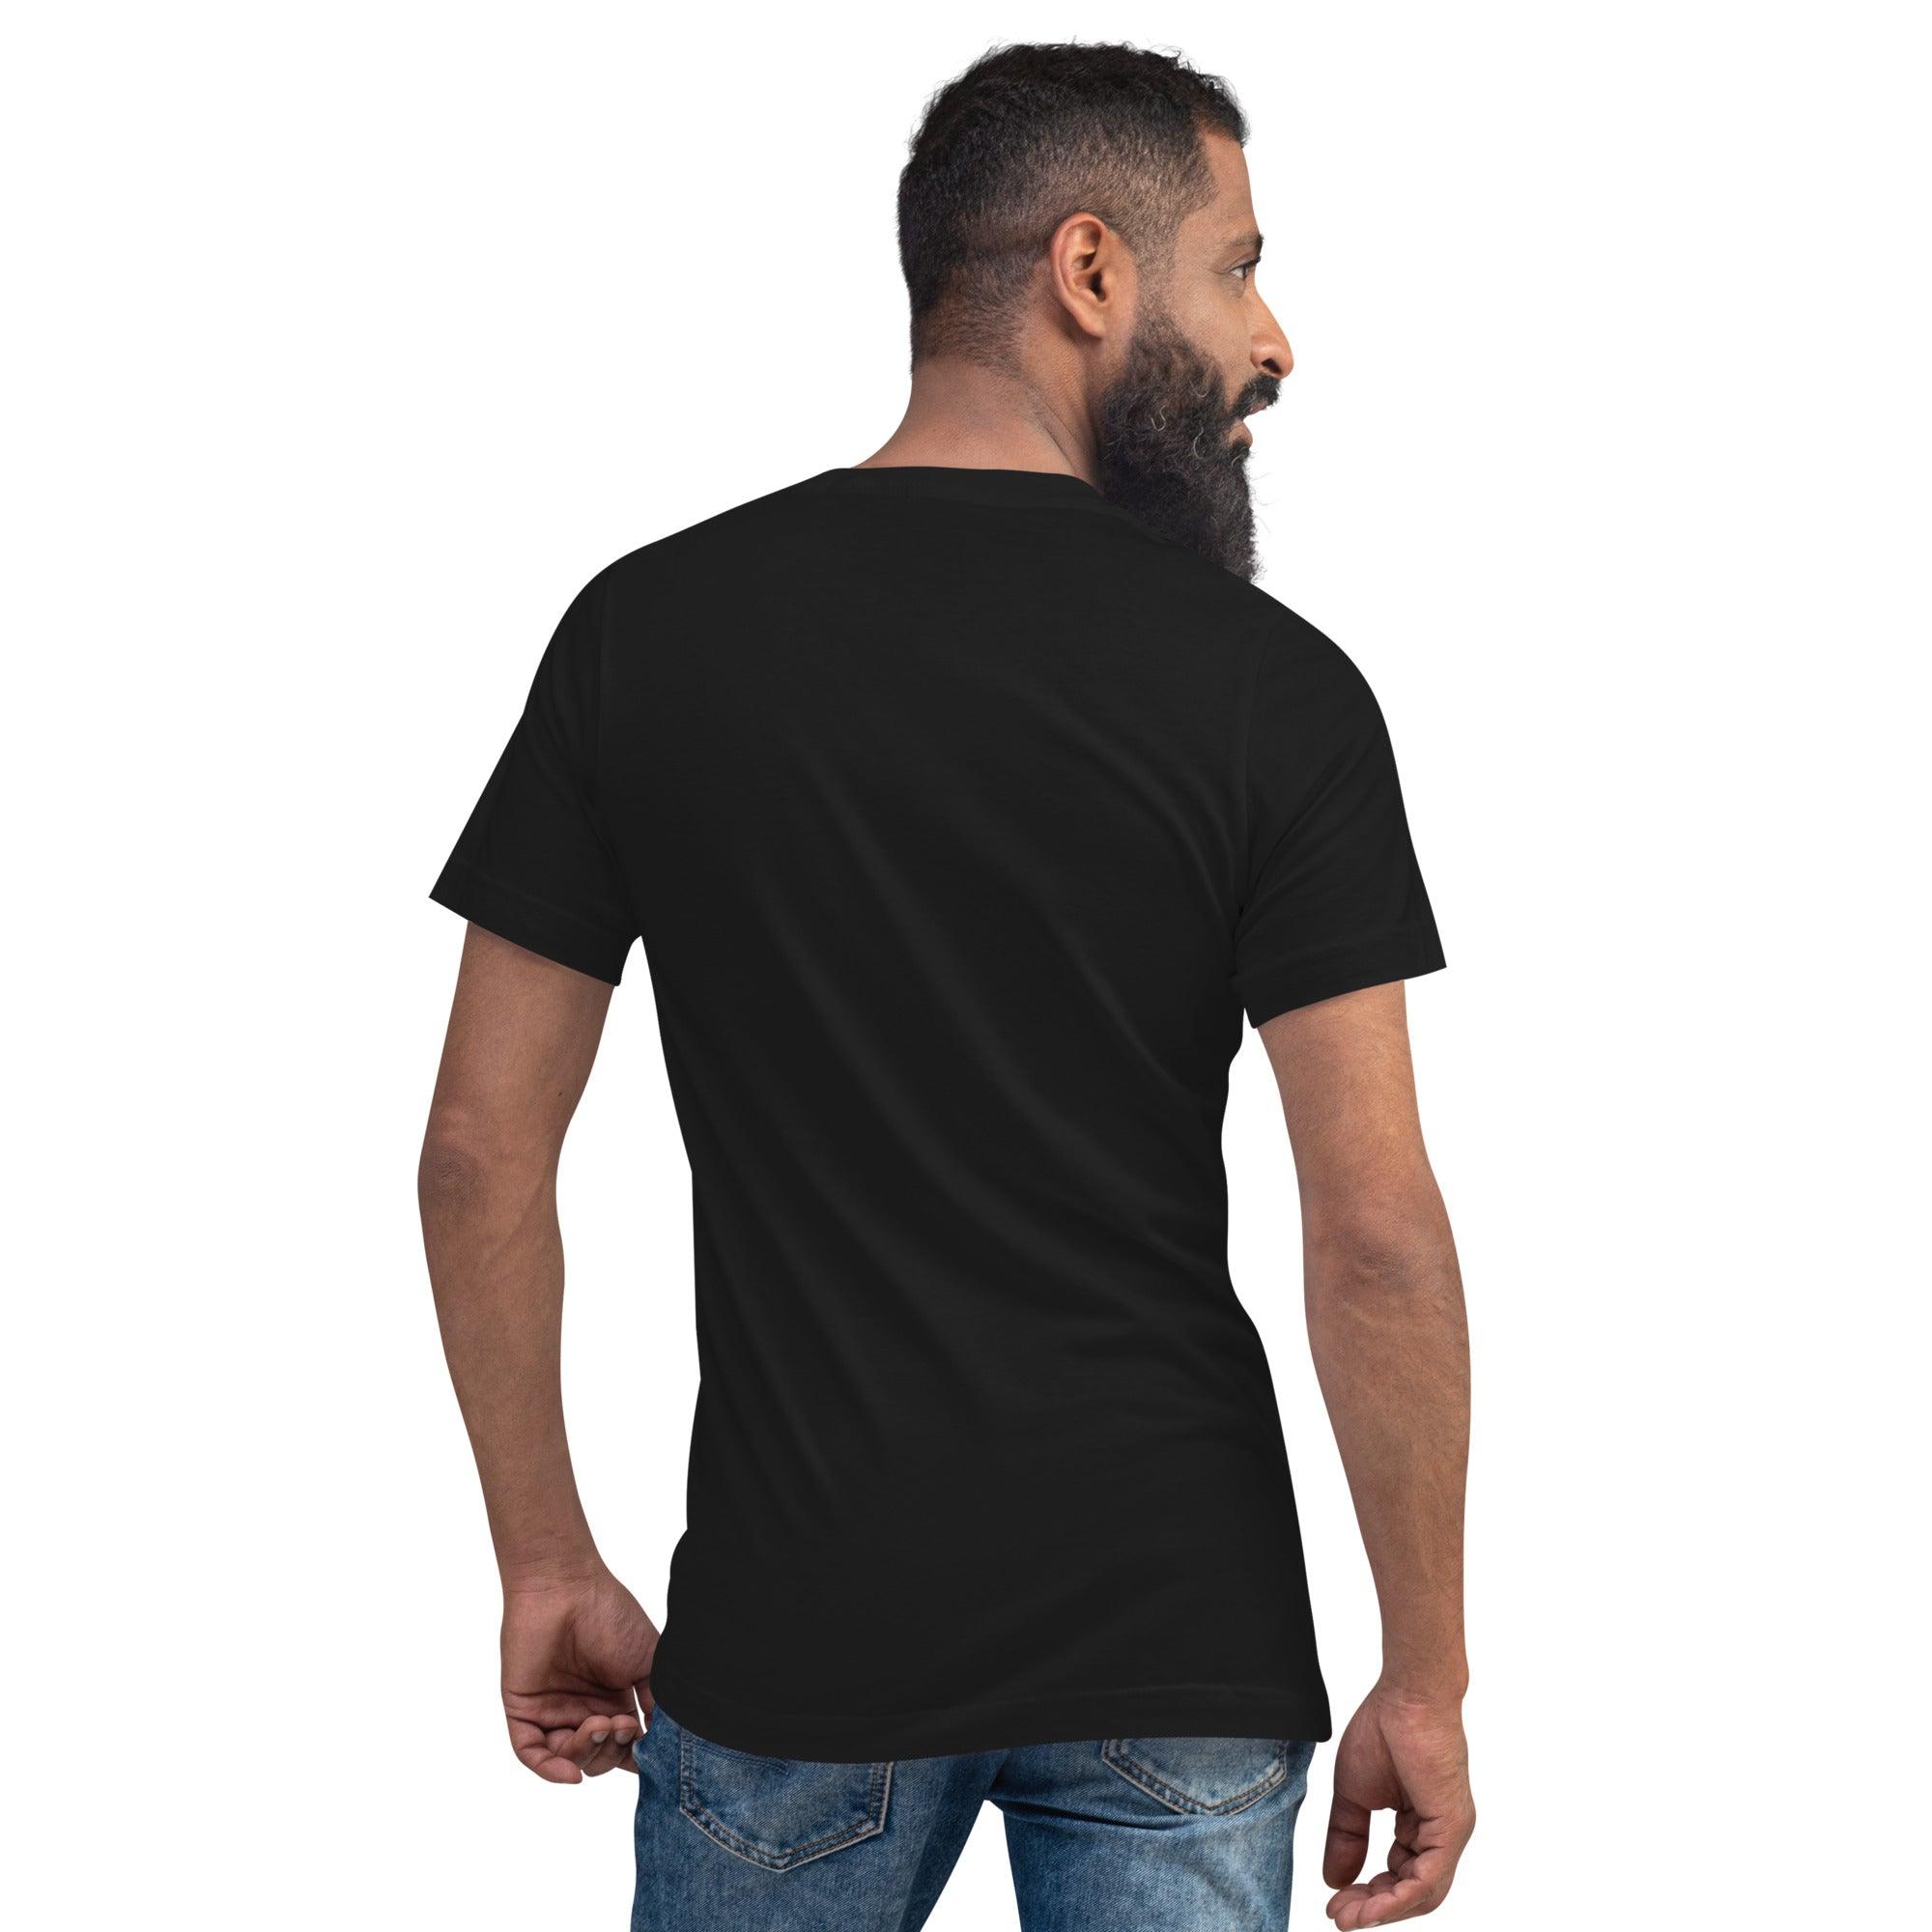 Blue Is Calling Unisex Short Sleeve V-Neck T-Shirt - Beyond T-shirts